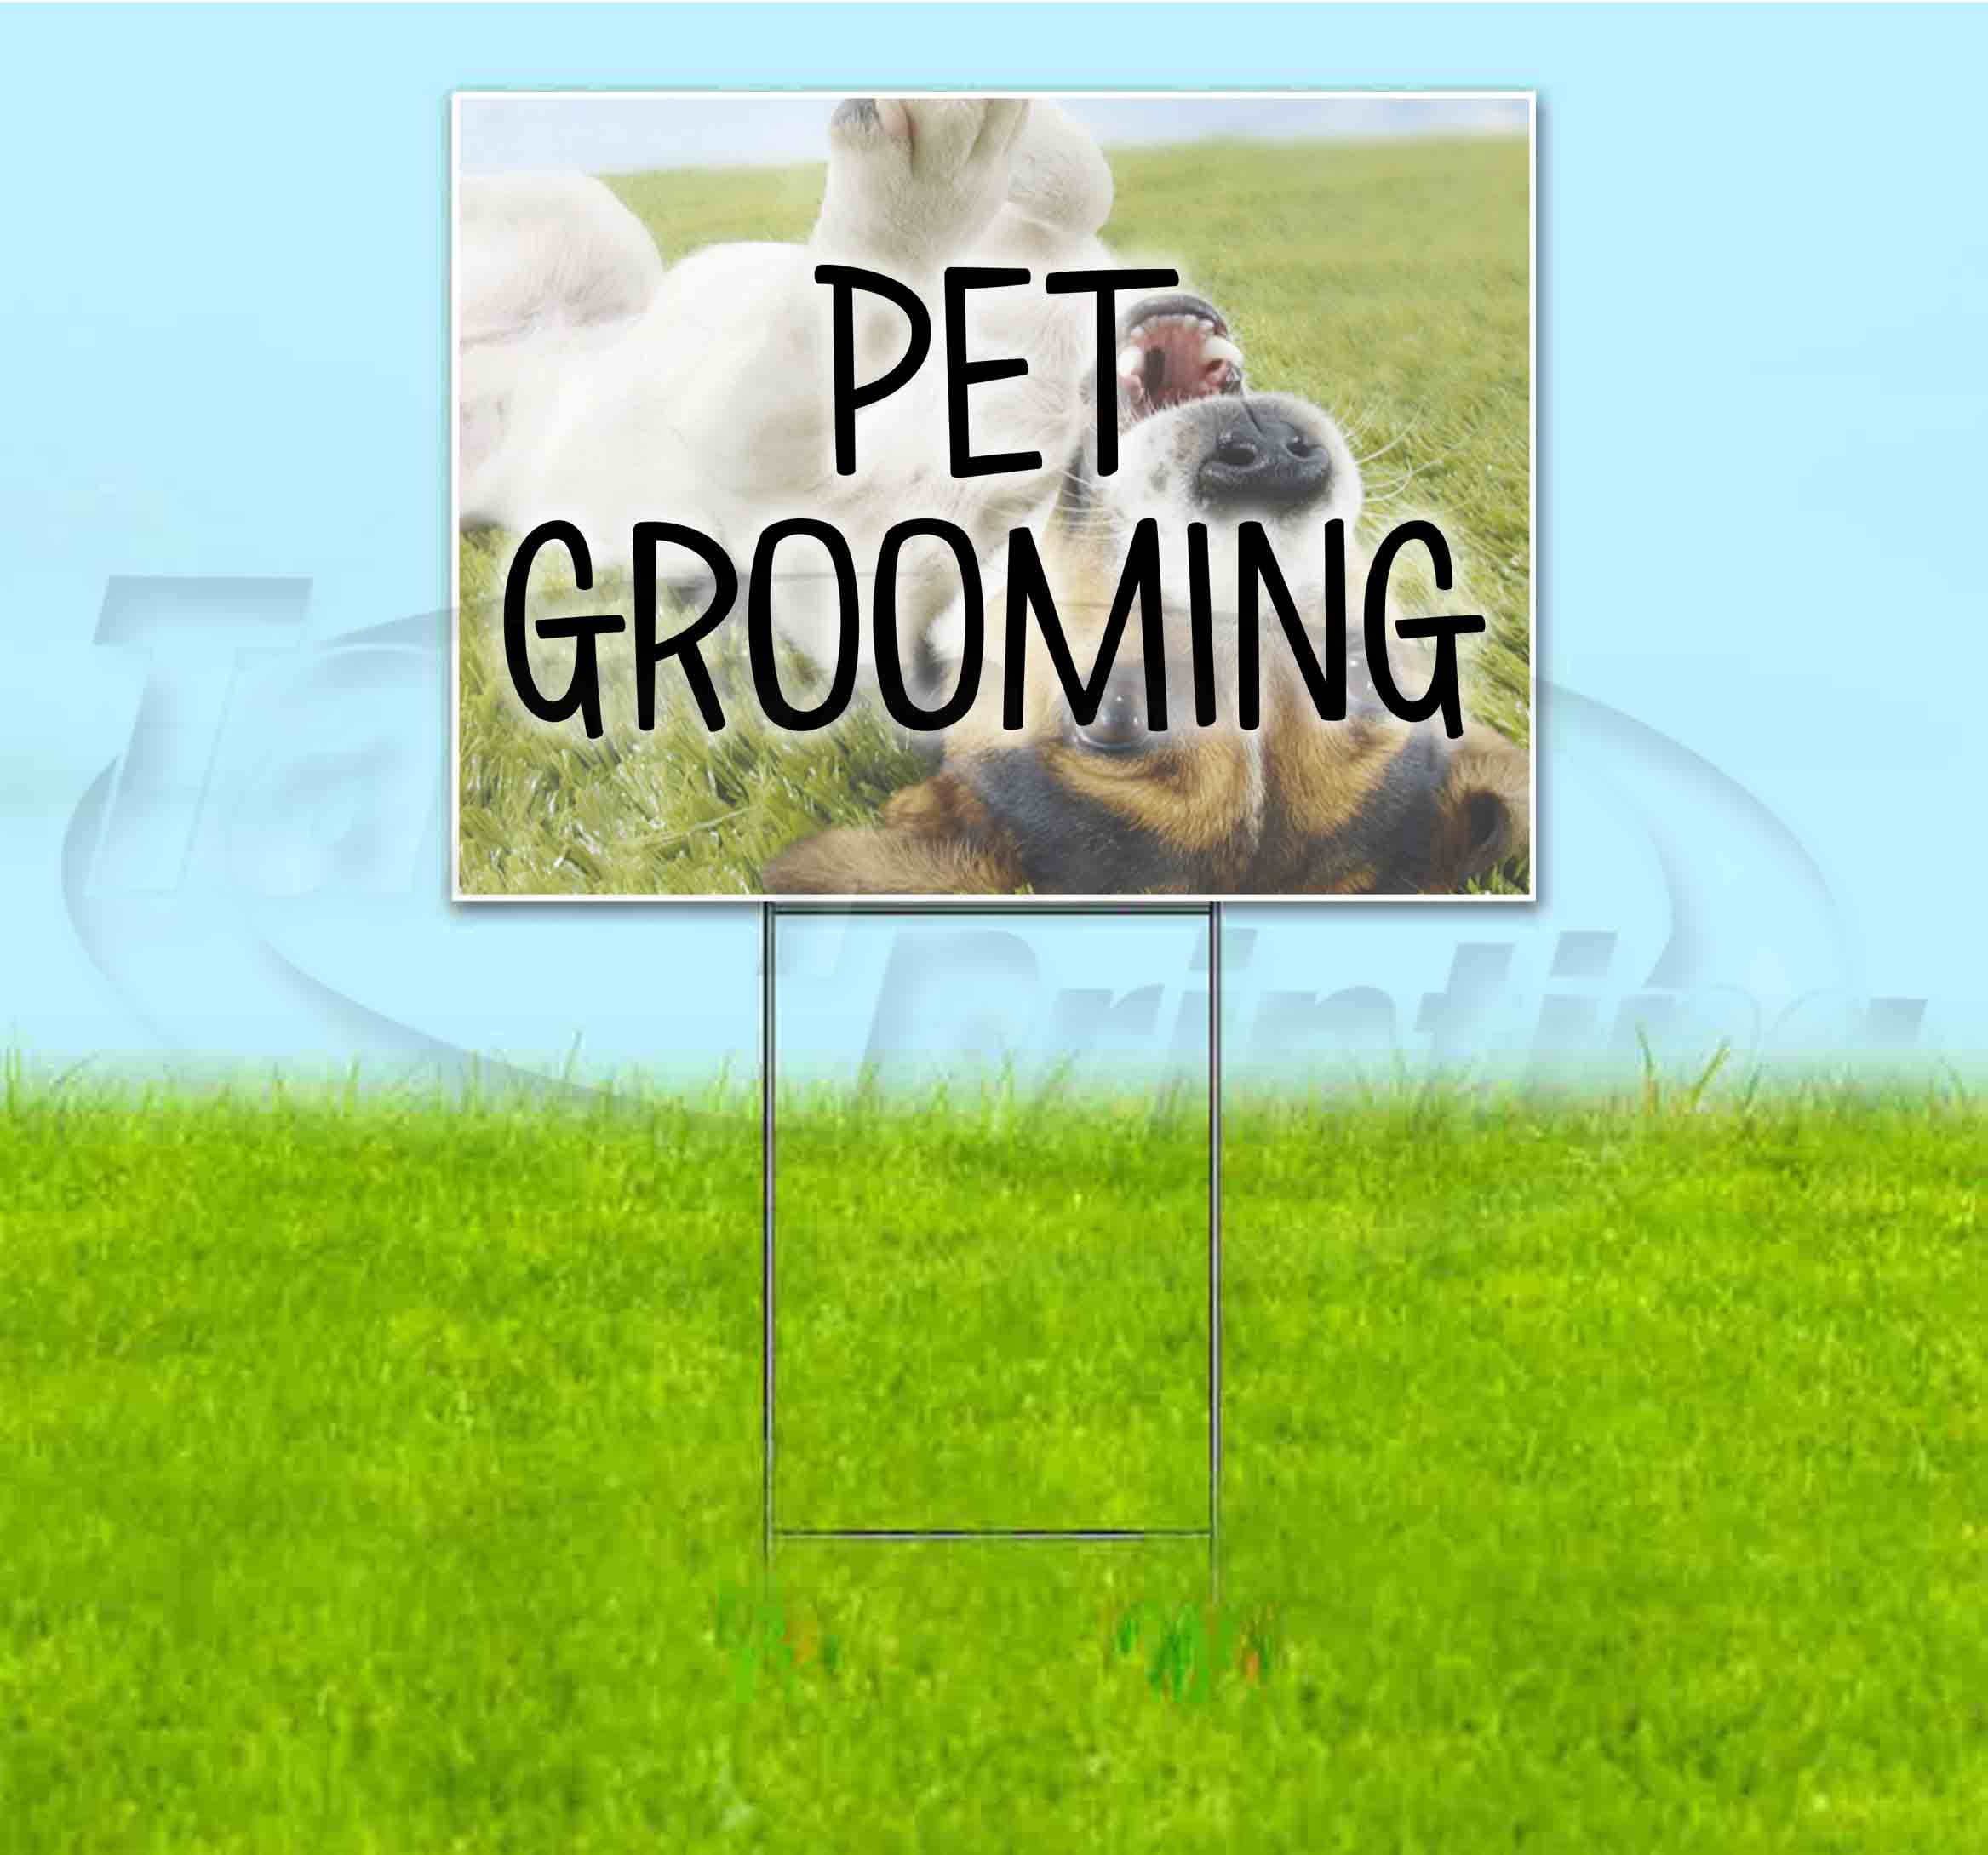 Pet Grooming Available Here Plastic Indoor Outdoor Coroplast Yard Sign 